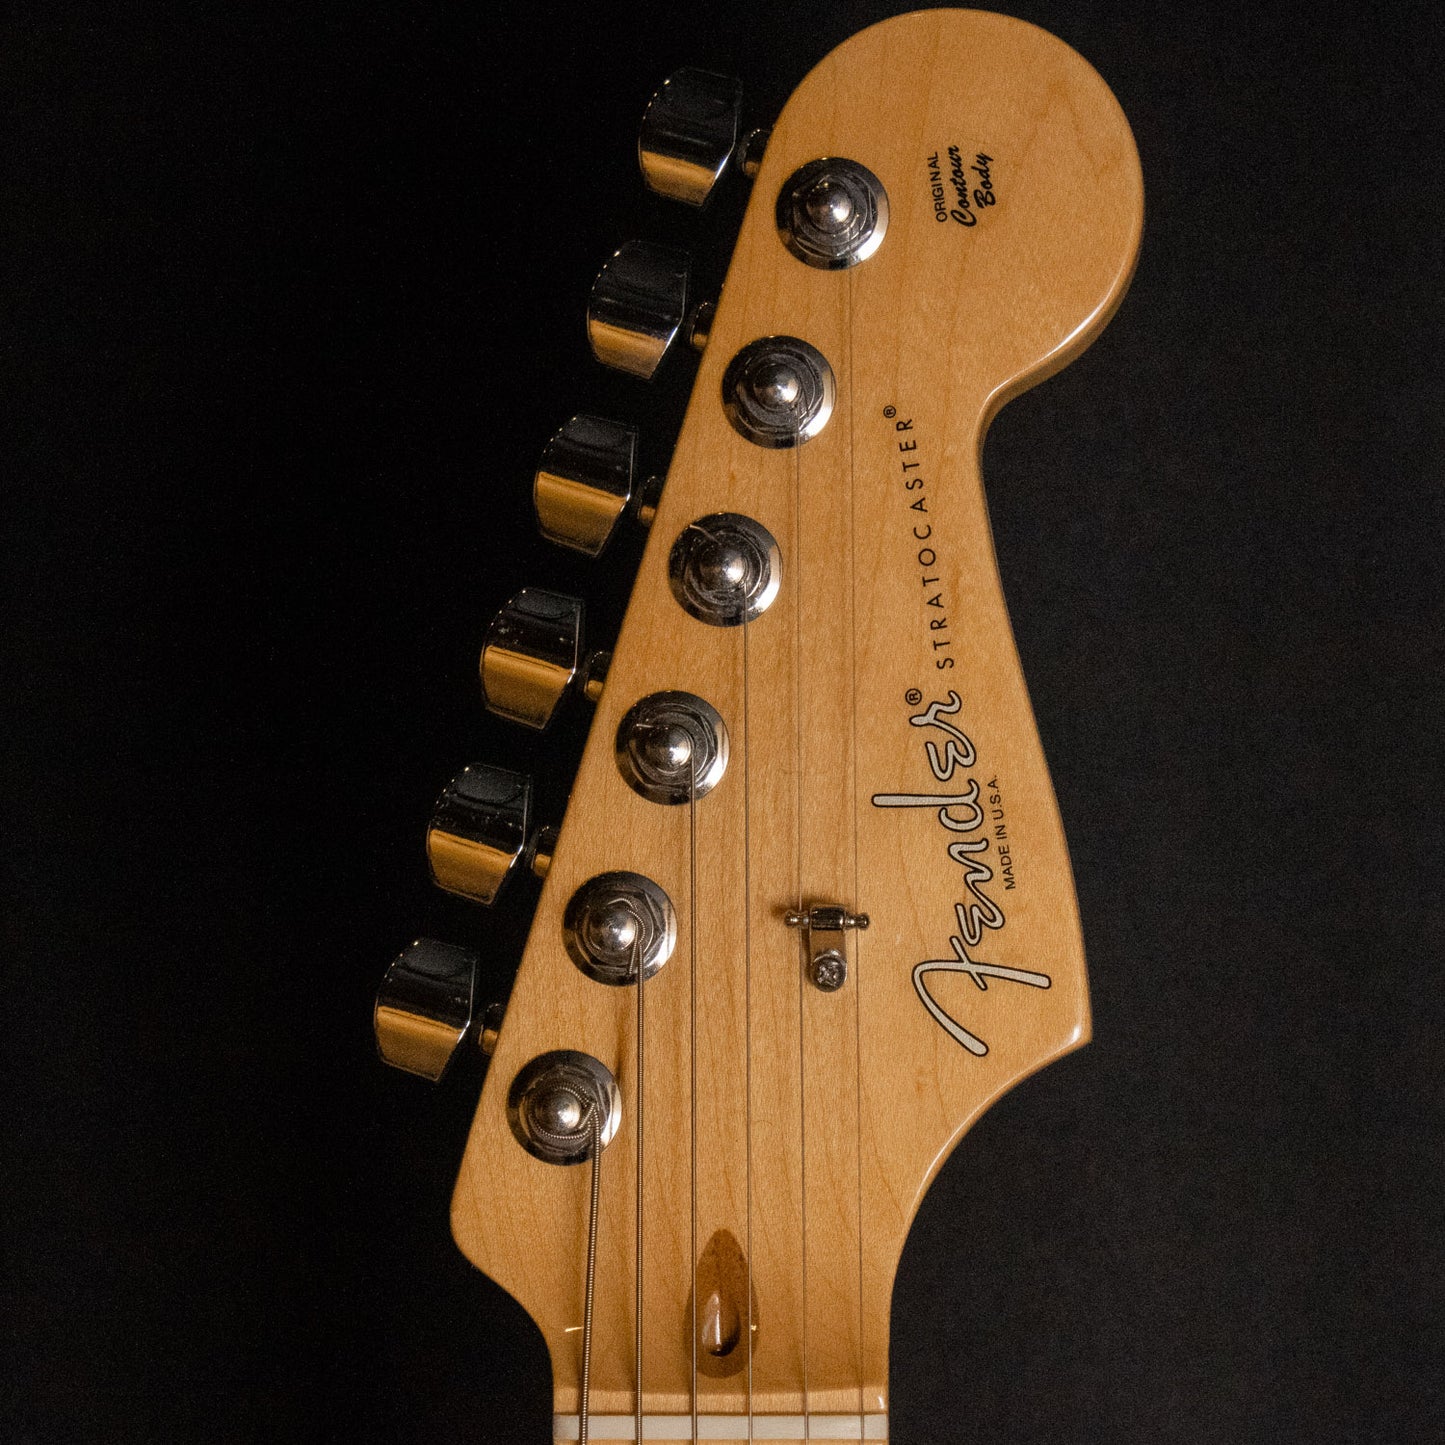 2016 Fender Stratocaster American Standard